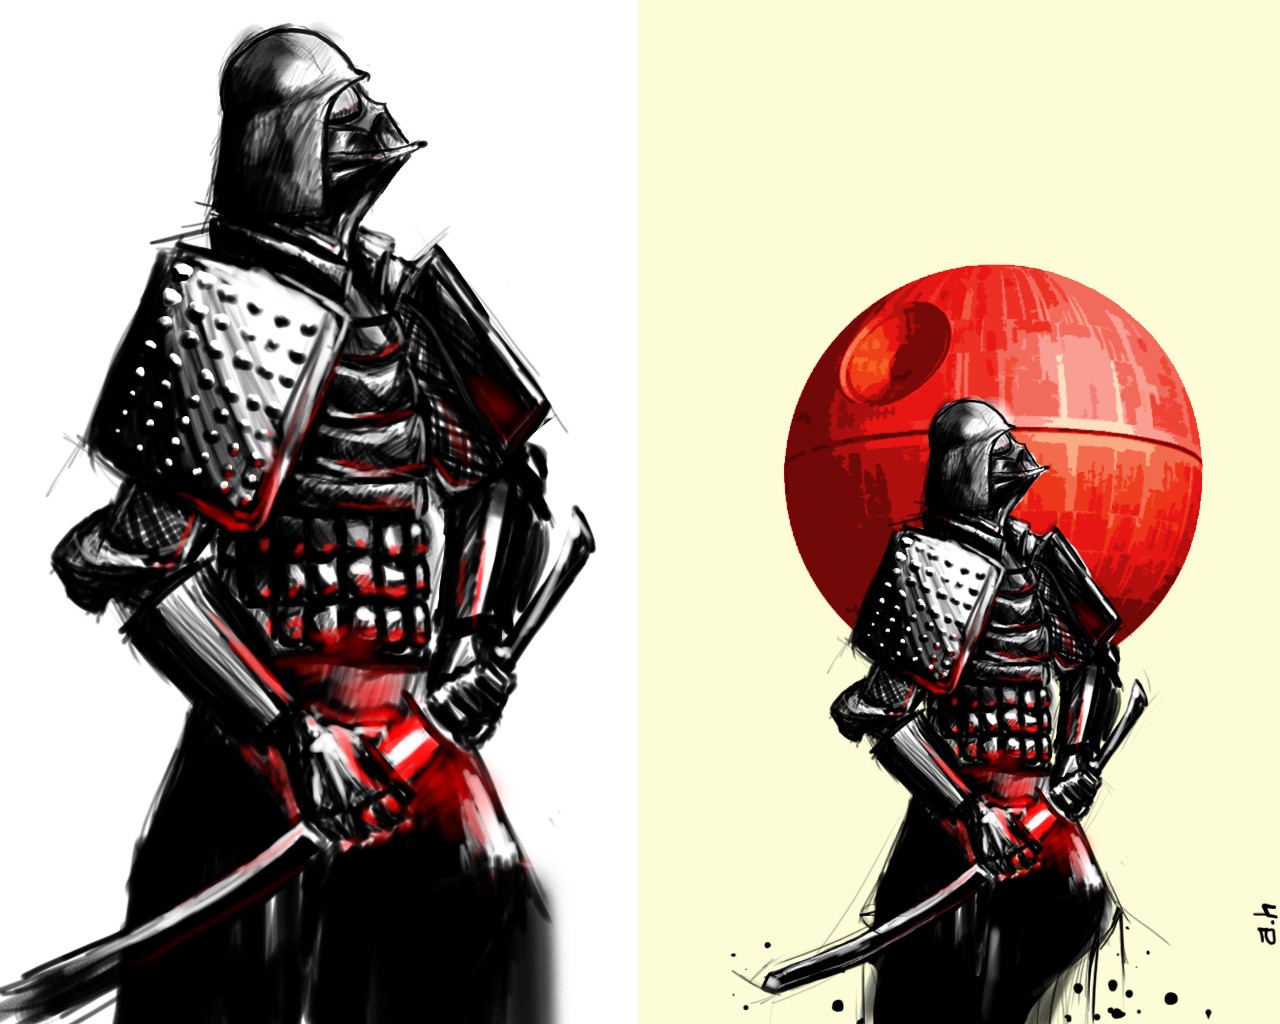 General 1280x1024 Star Wars samurai Darth Vader Death Star sword artwork collage fan art science fiction Sith Star Wars Villains white background armor simple background